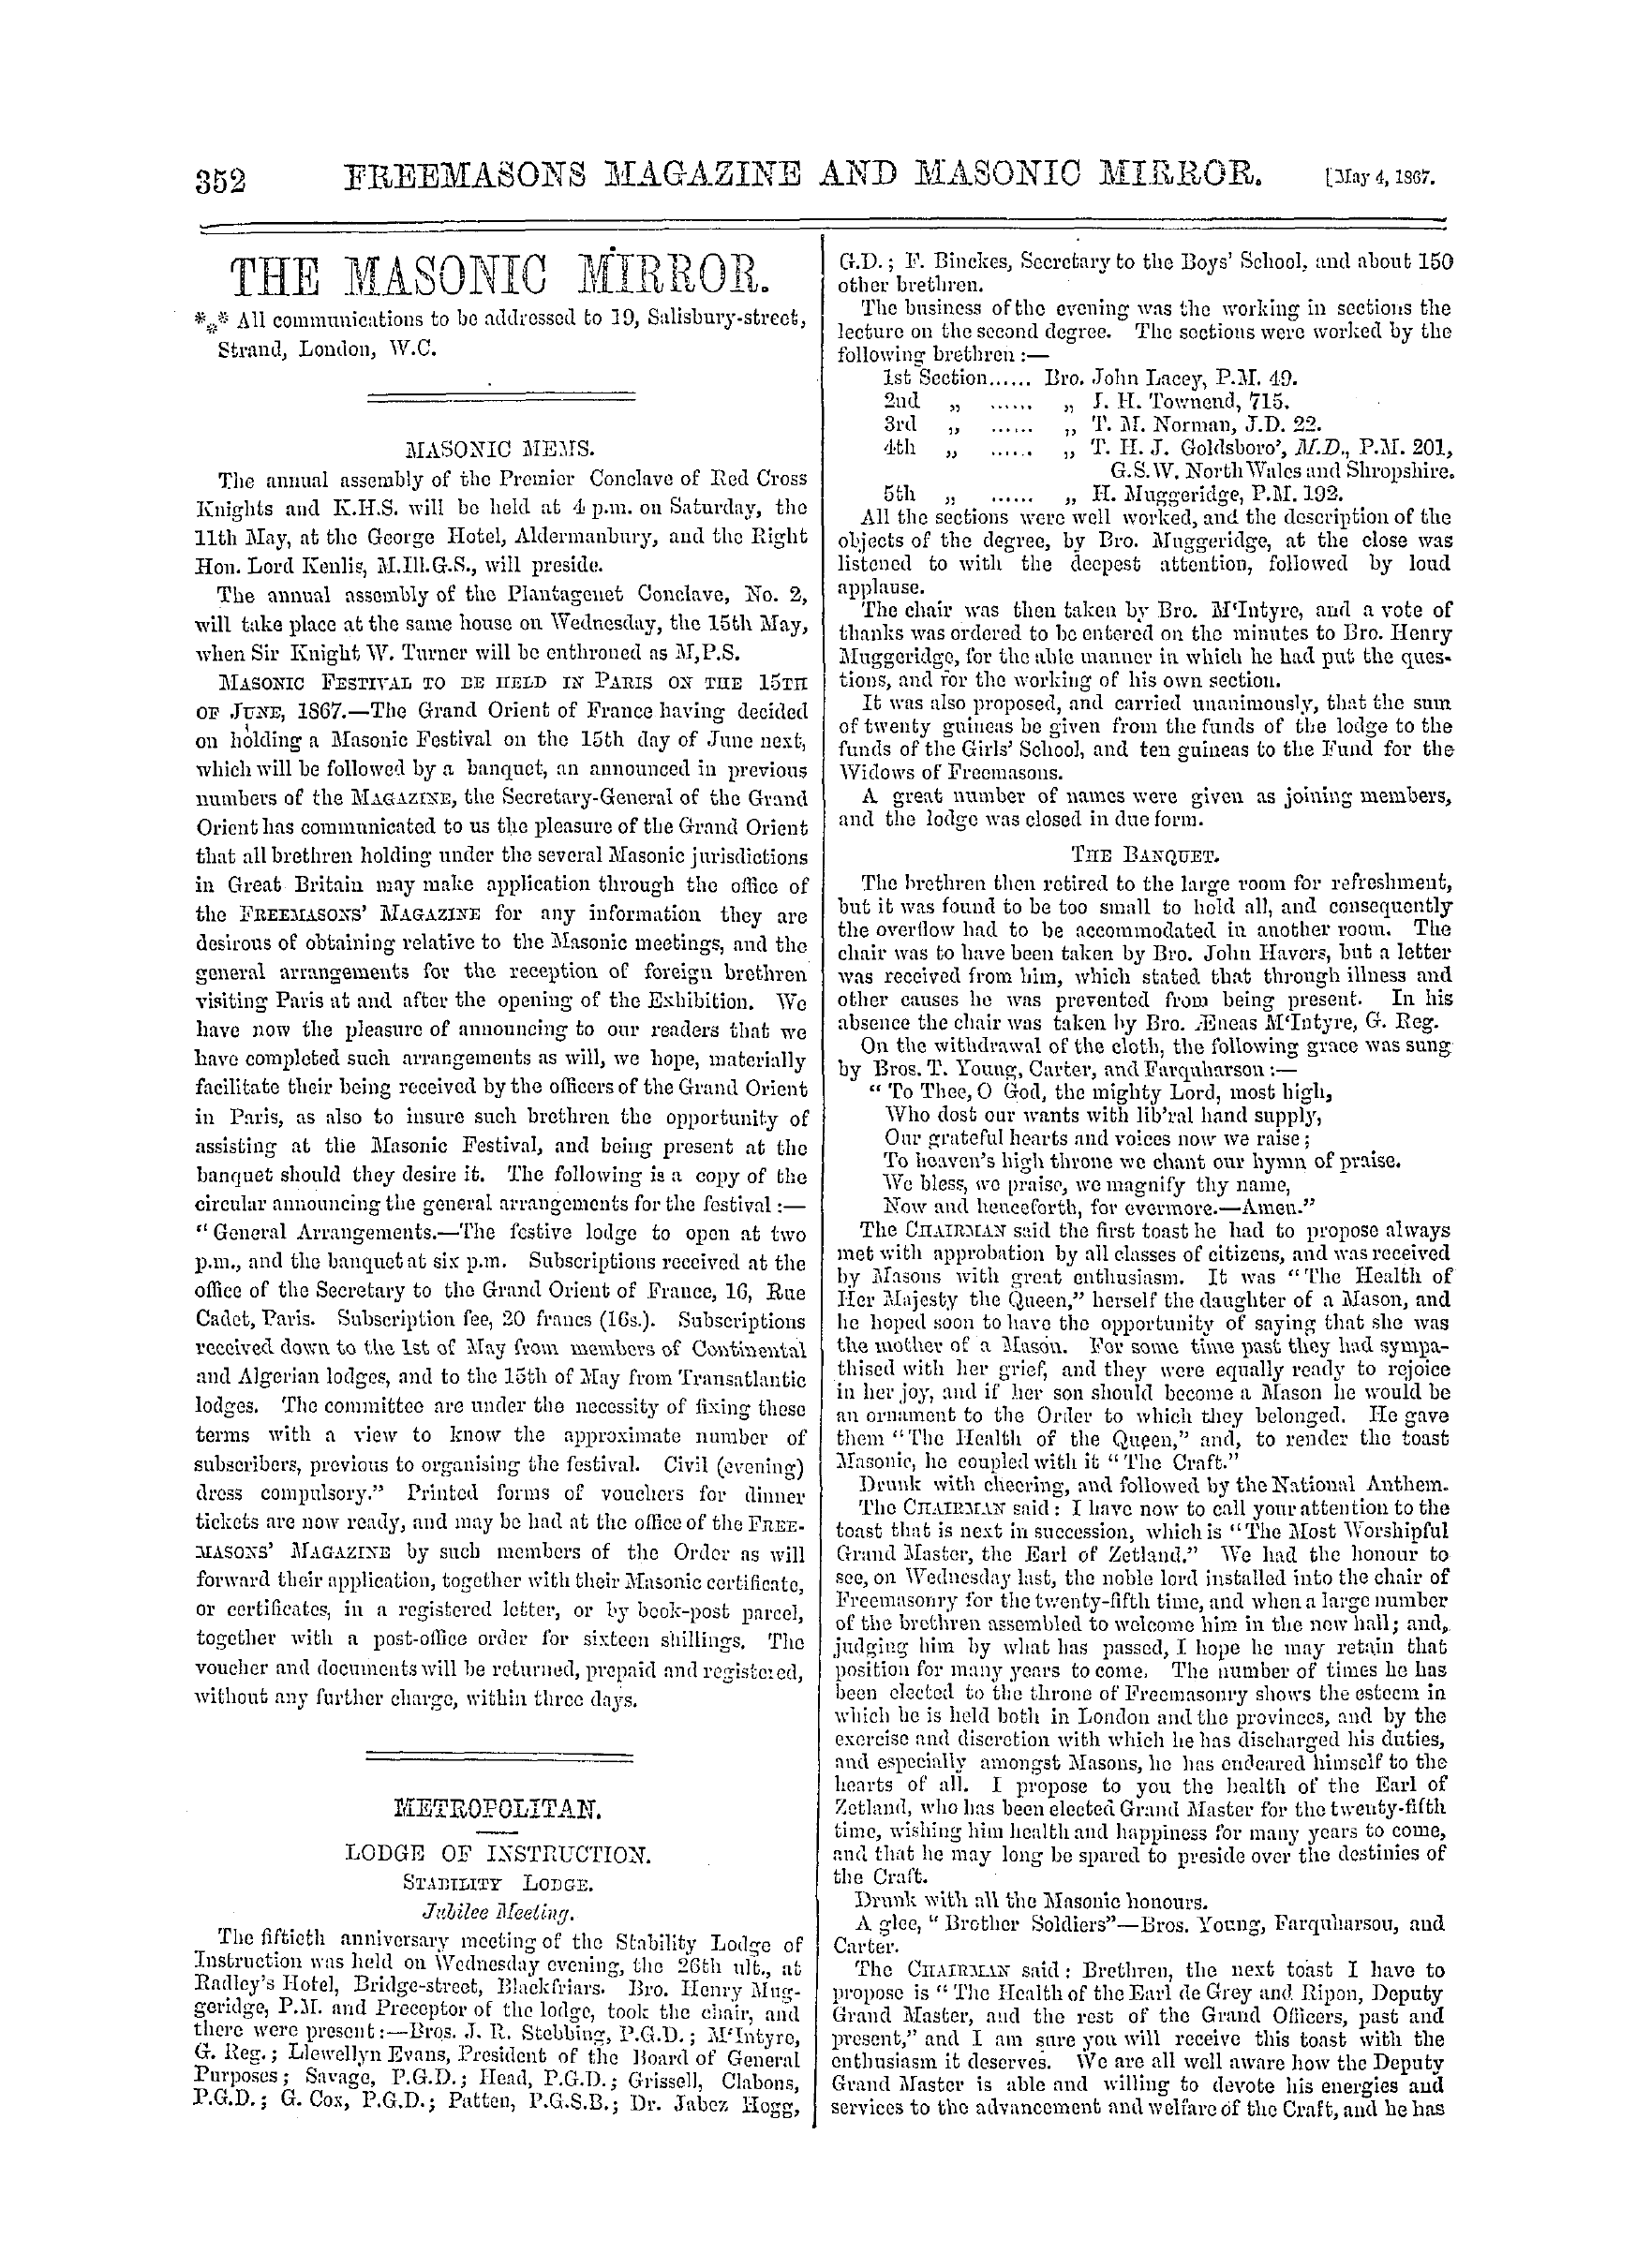 The Freemasons' Monthly Magazine: 1867-05-04 - Metropolitan.